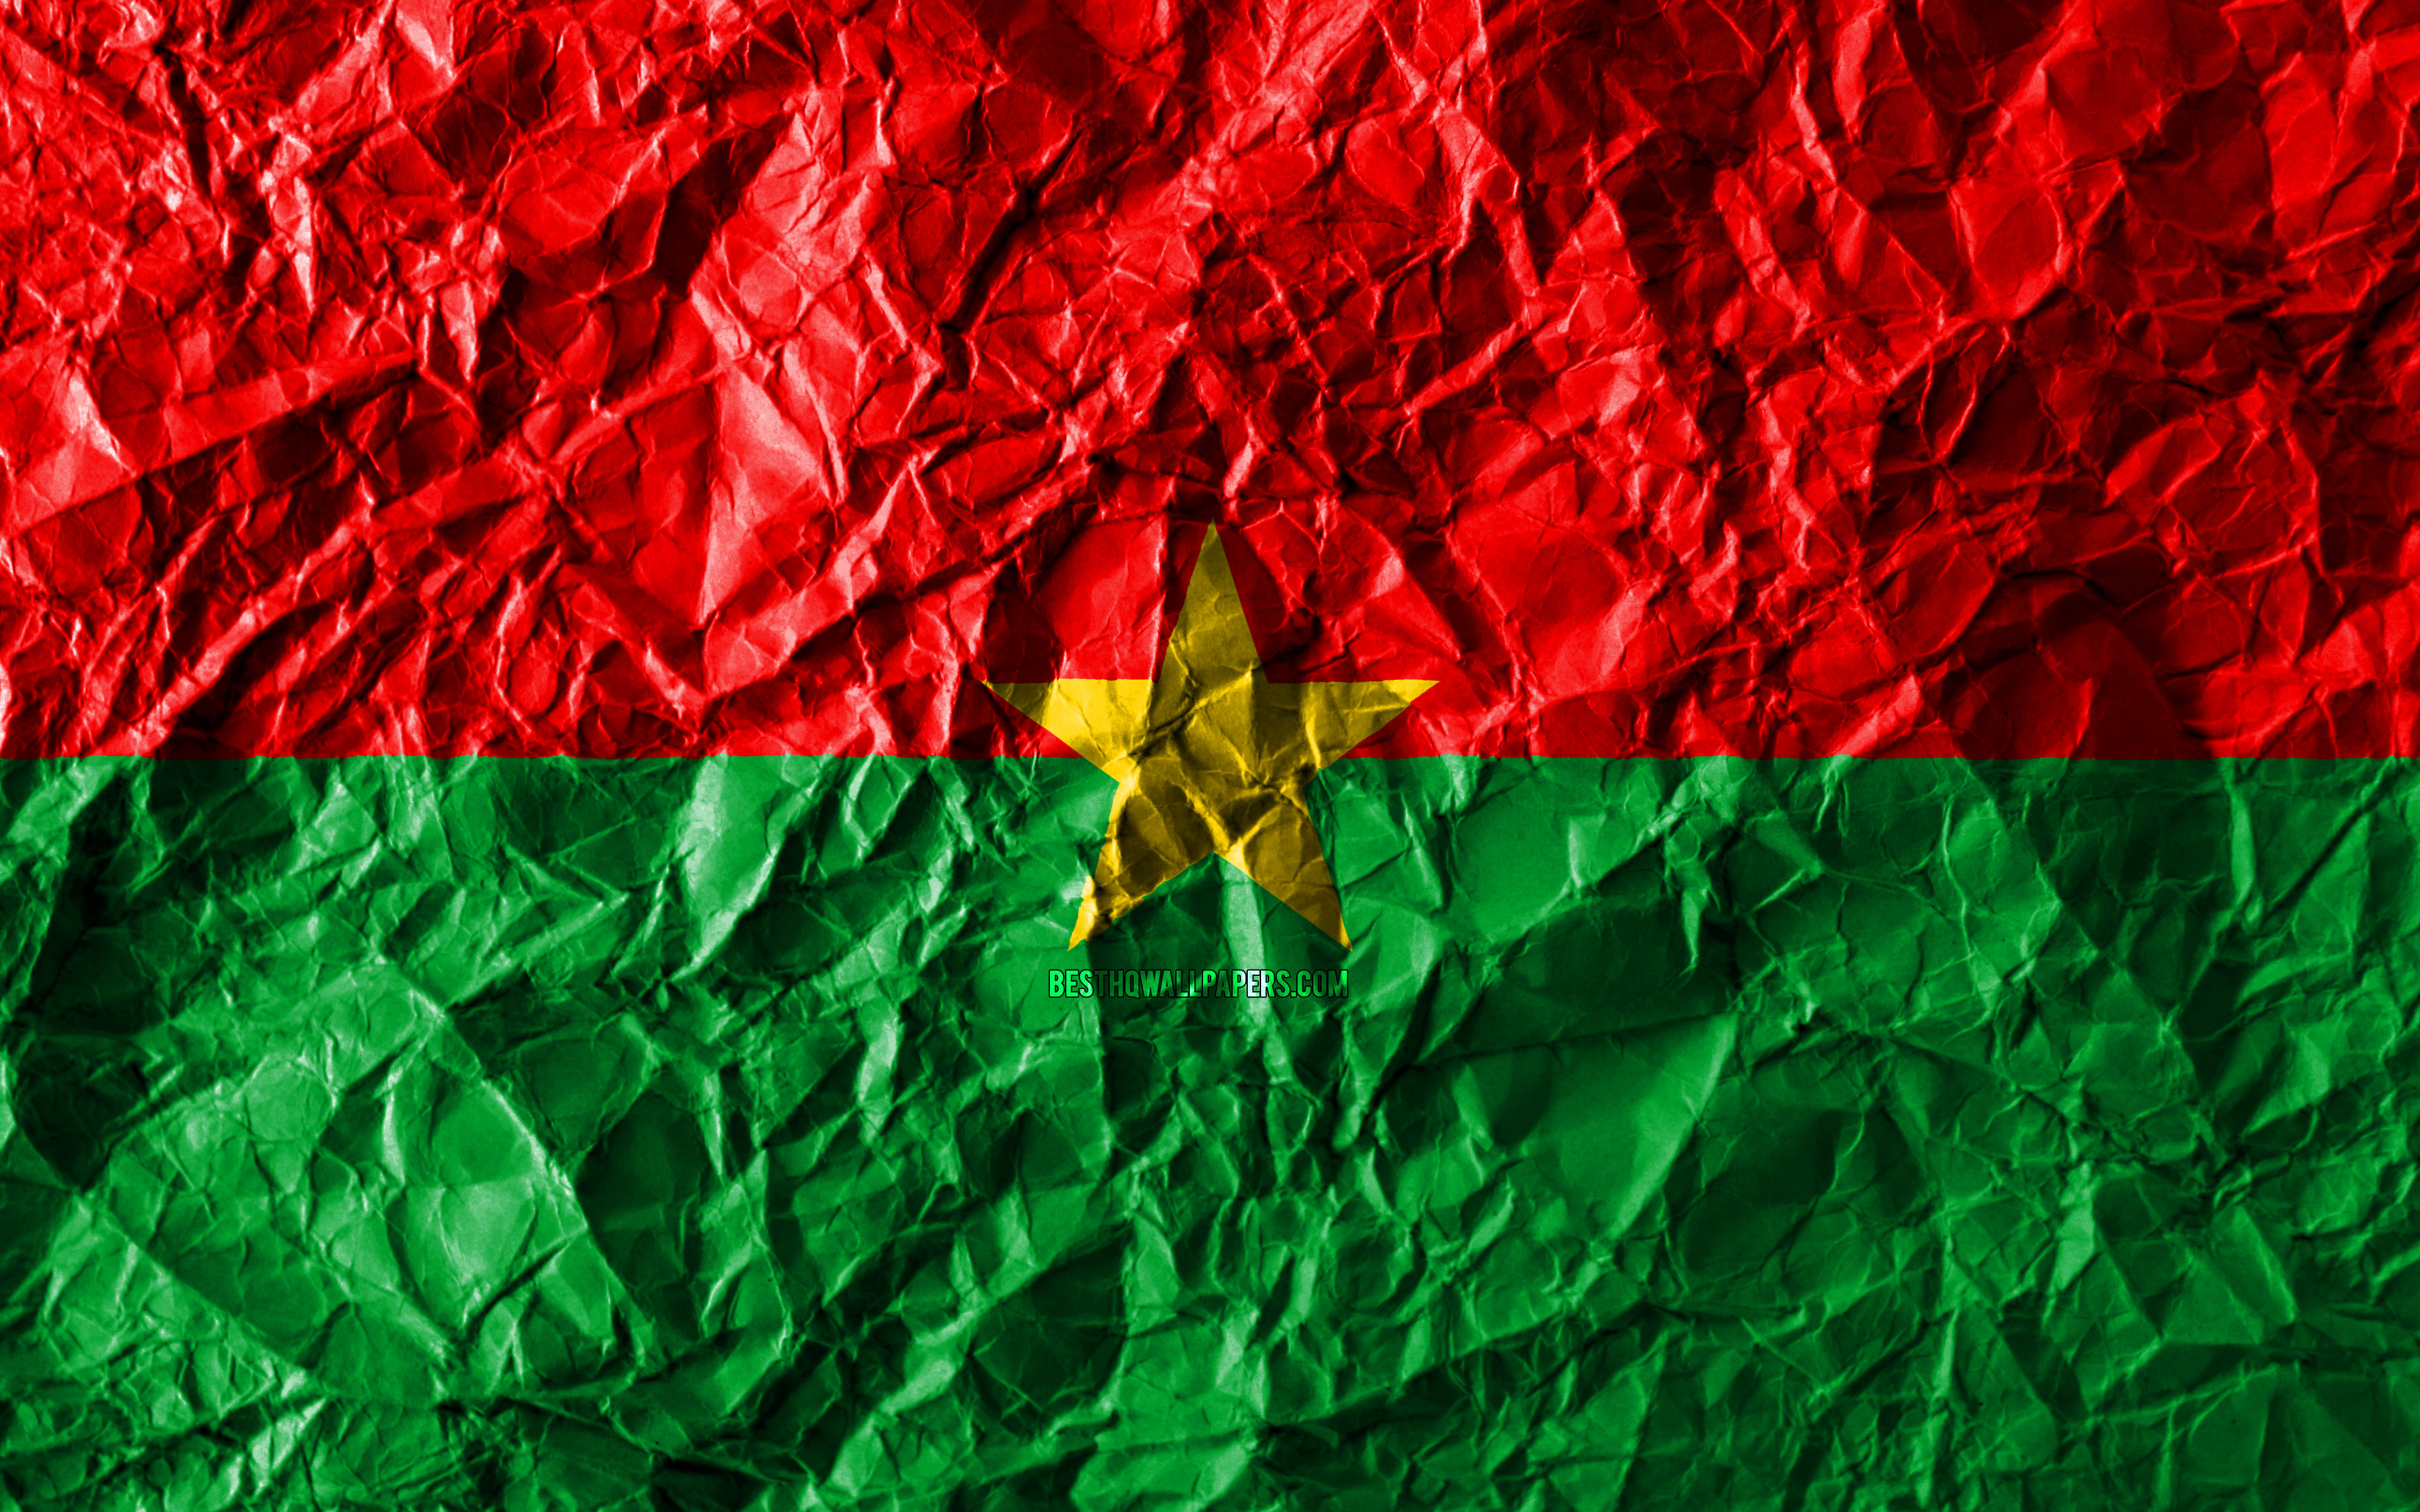 Burkina Faso Wallpapers